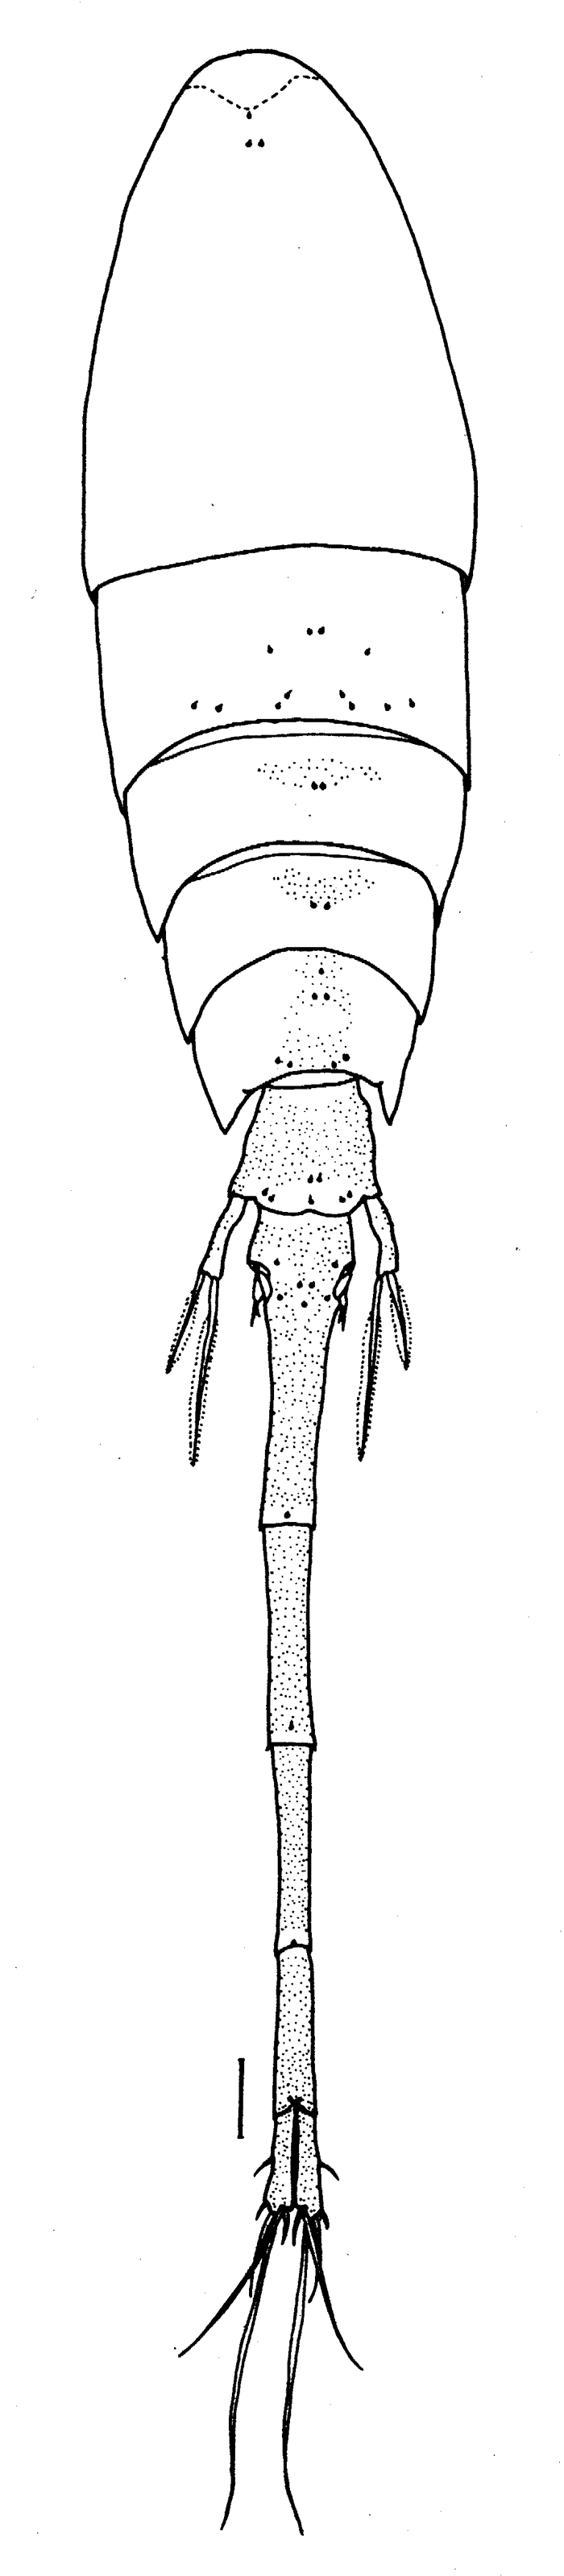 Species Lubbockia wilsonae - Plate 3 of morphological figures